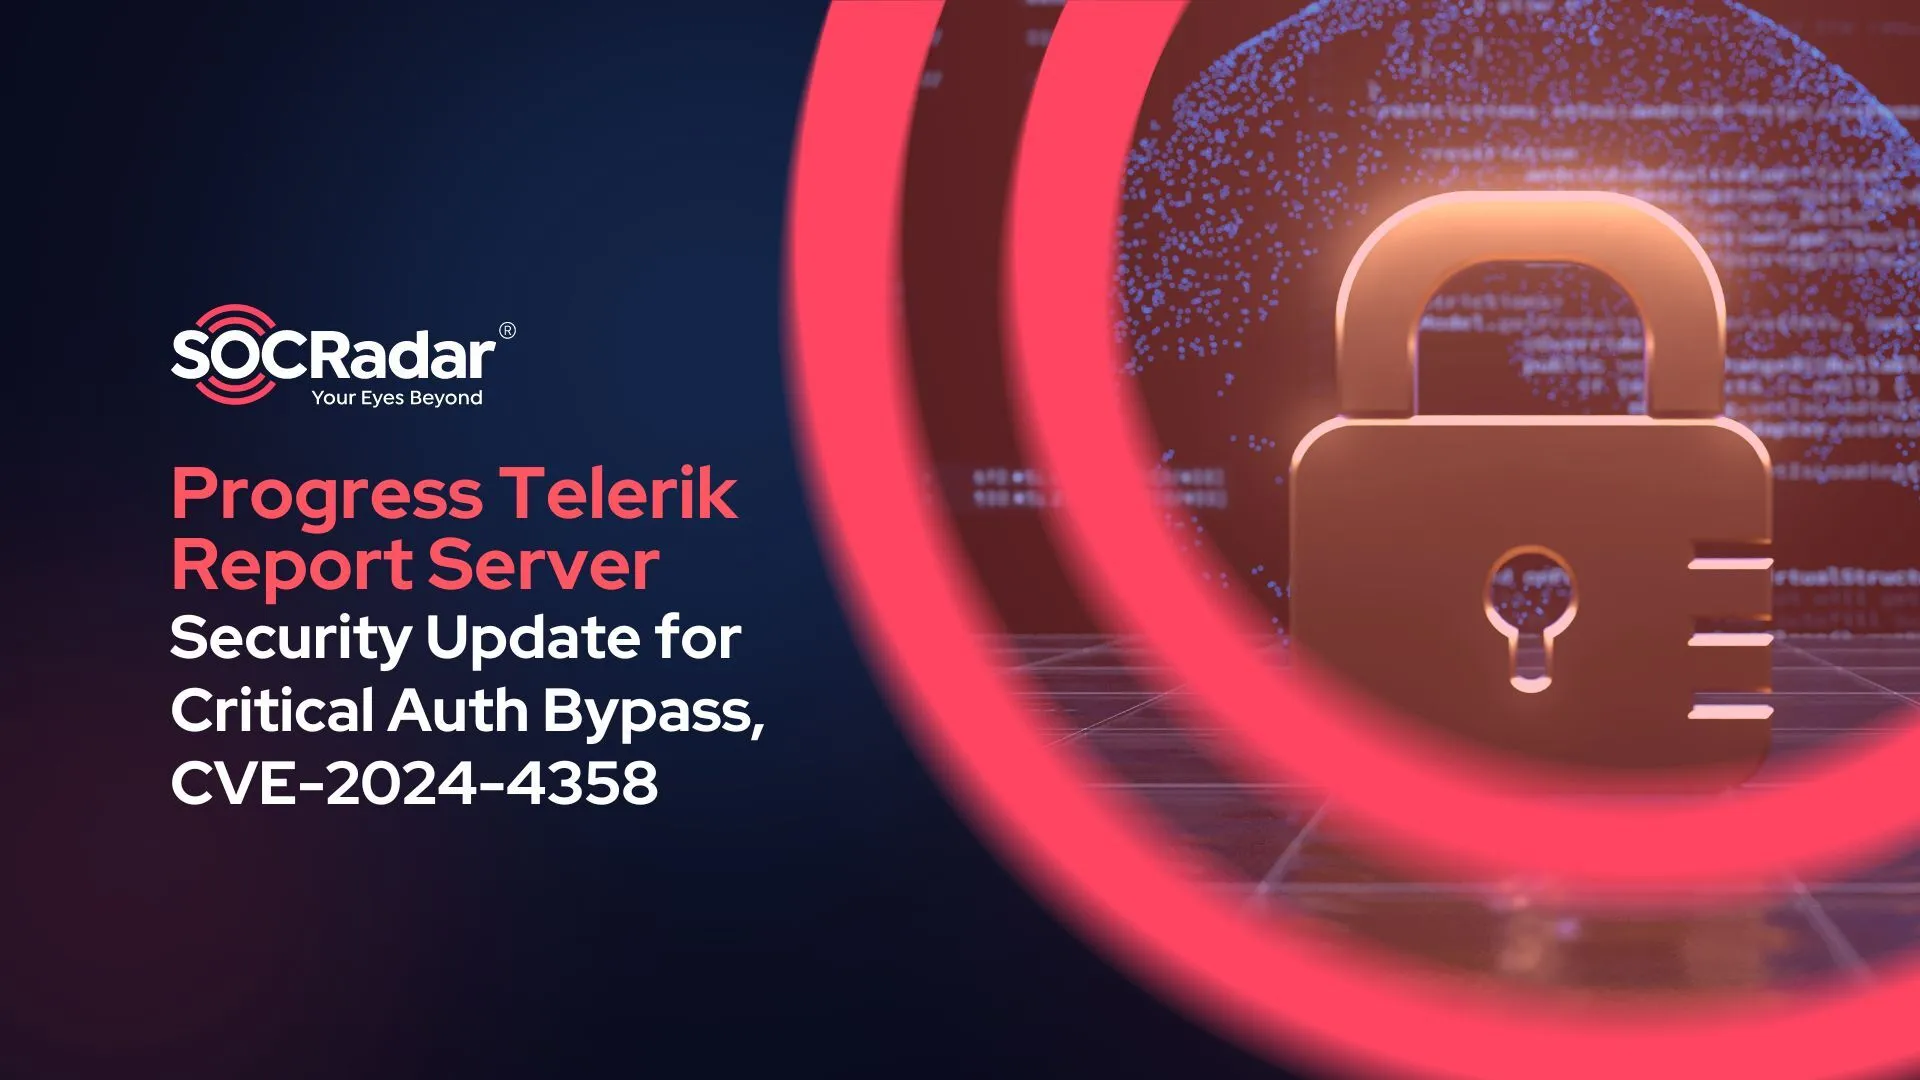 SOCRadar® Cyber Intelligence Inc. | Progress Telerik Report Server Receives Security Update for Critical Auth Bypass Vulnerability, CVE-2024-4358